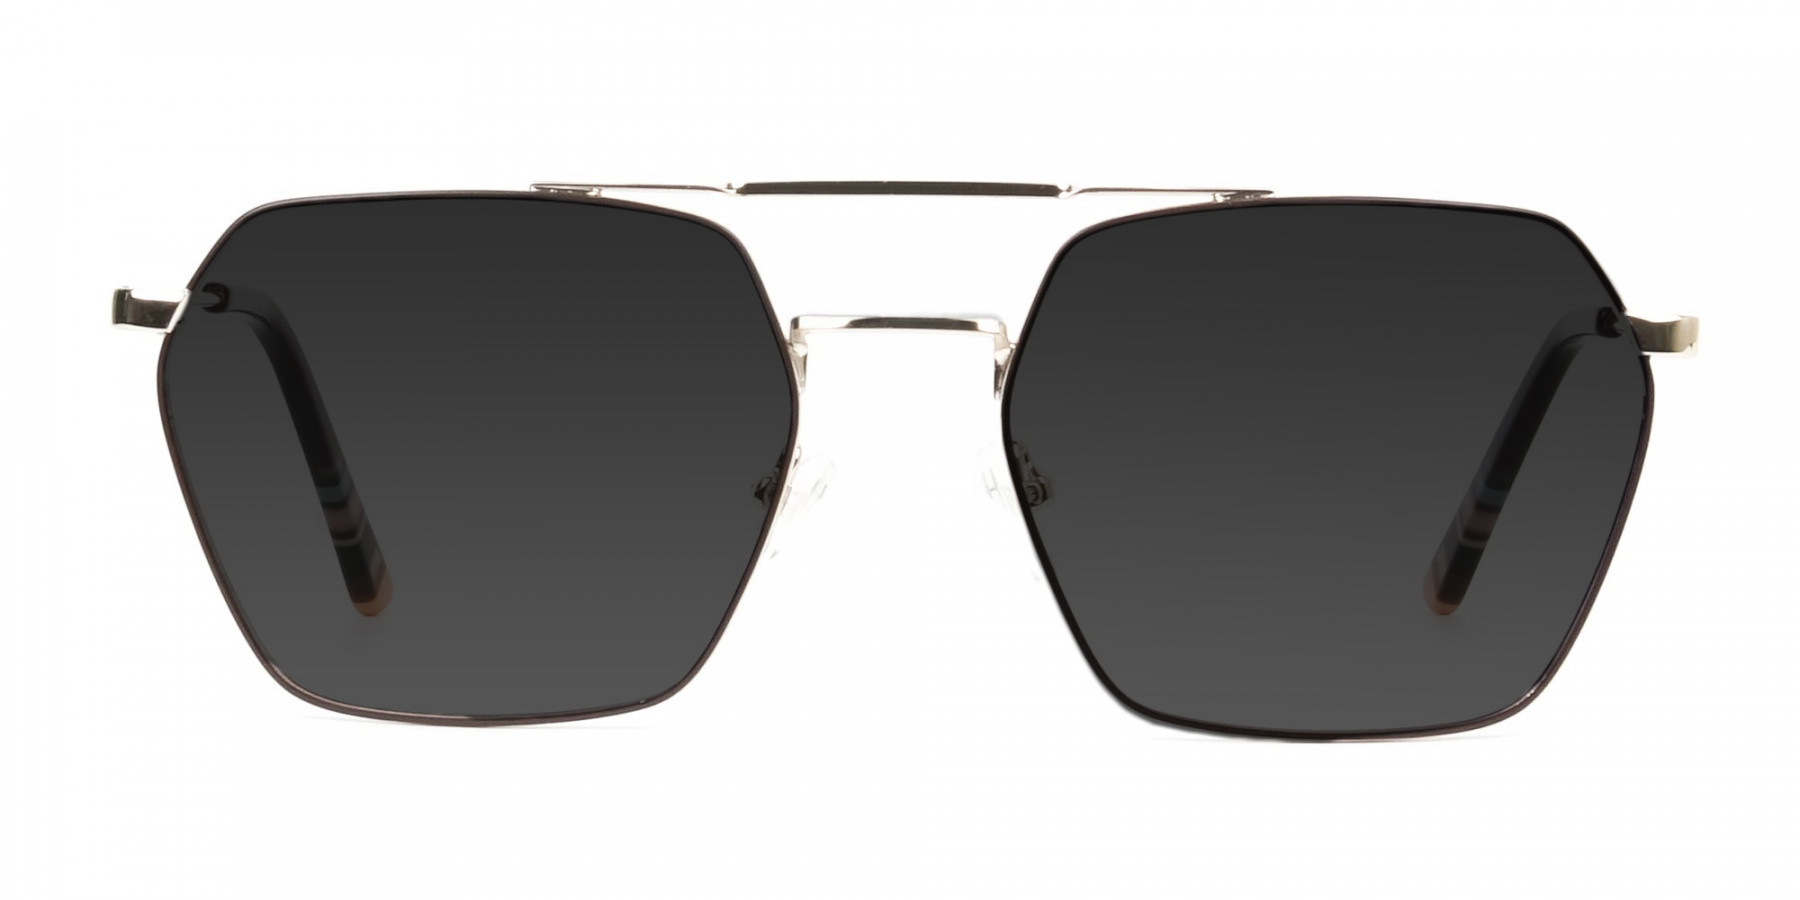 gold-gunmetal-dark-grey-tinted-geometric-aviator-sunglasses-frames-3